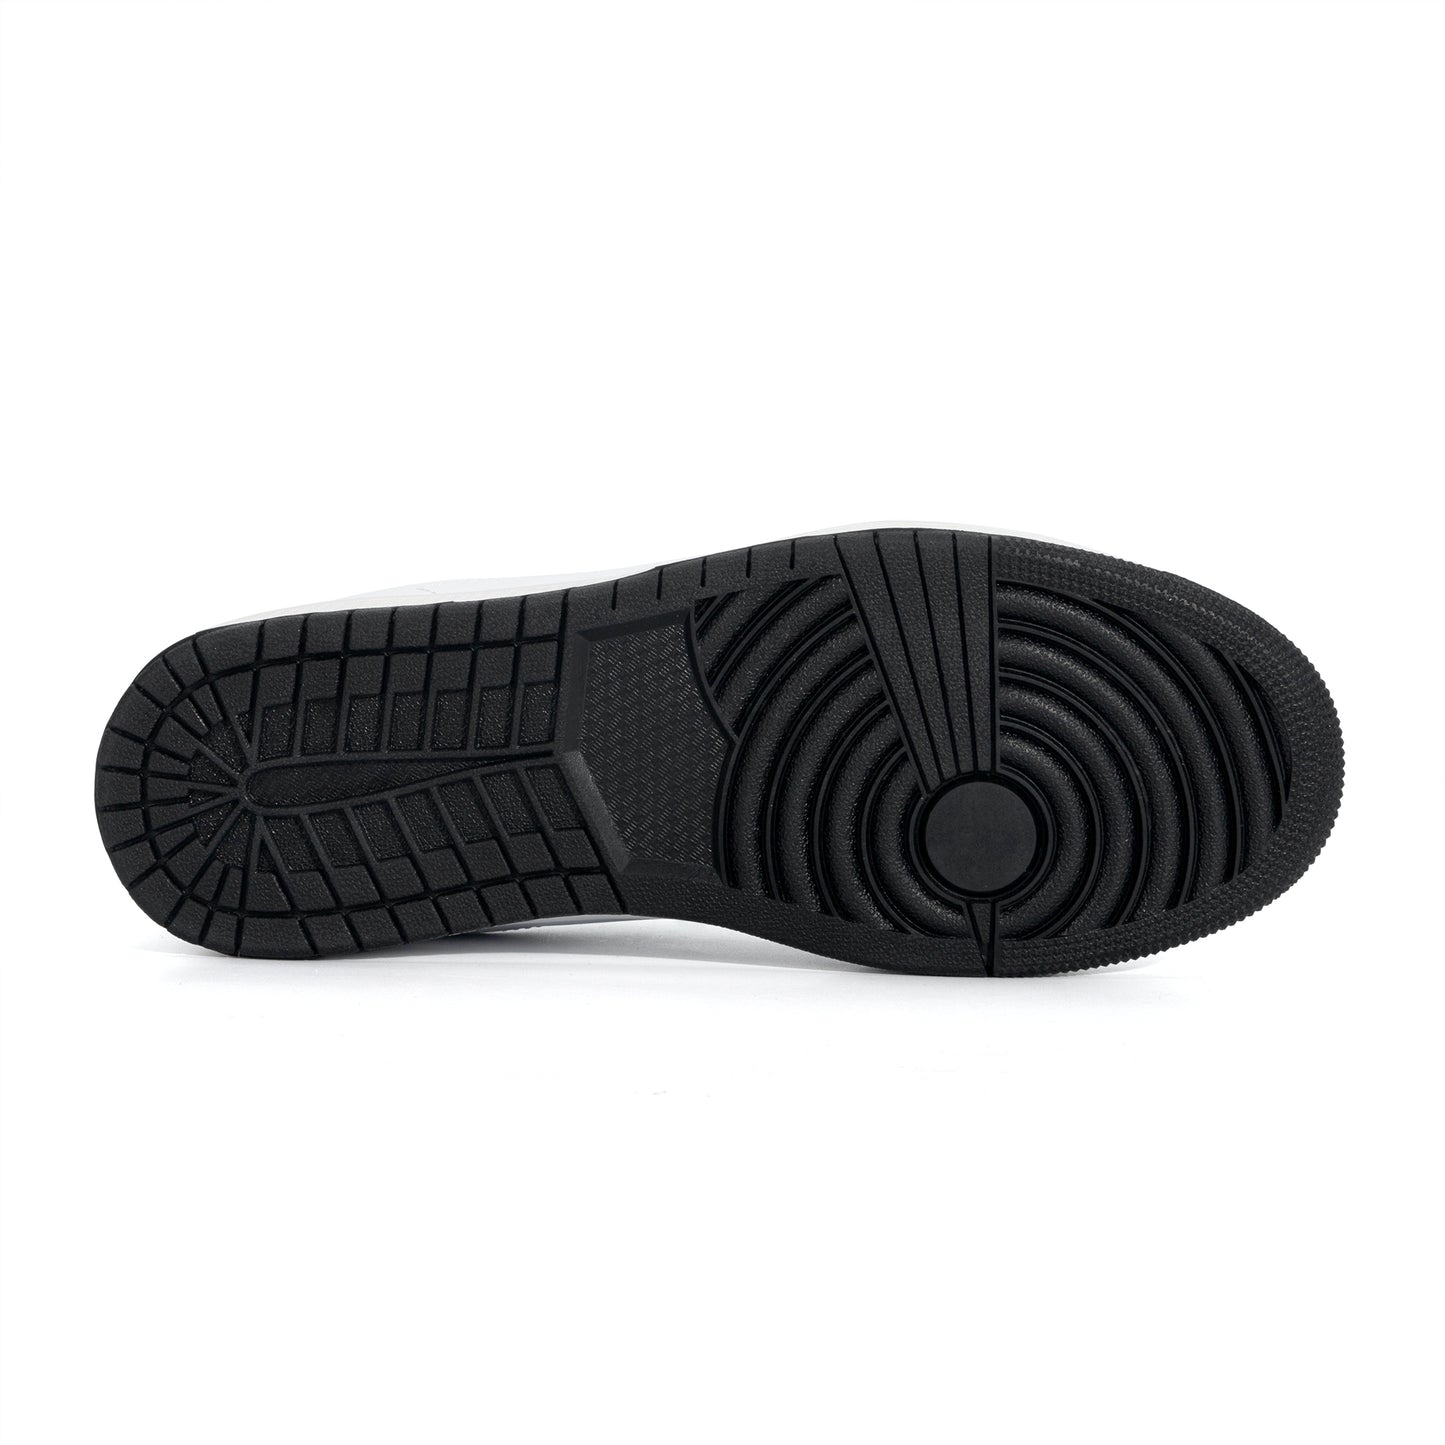 Men's Black Low Top Leather Sneakers Afremov SAIL REGATTA